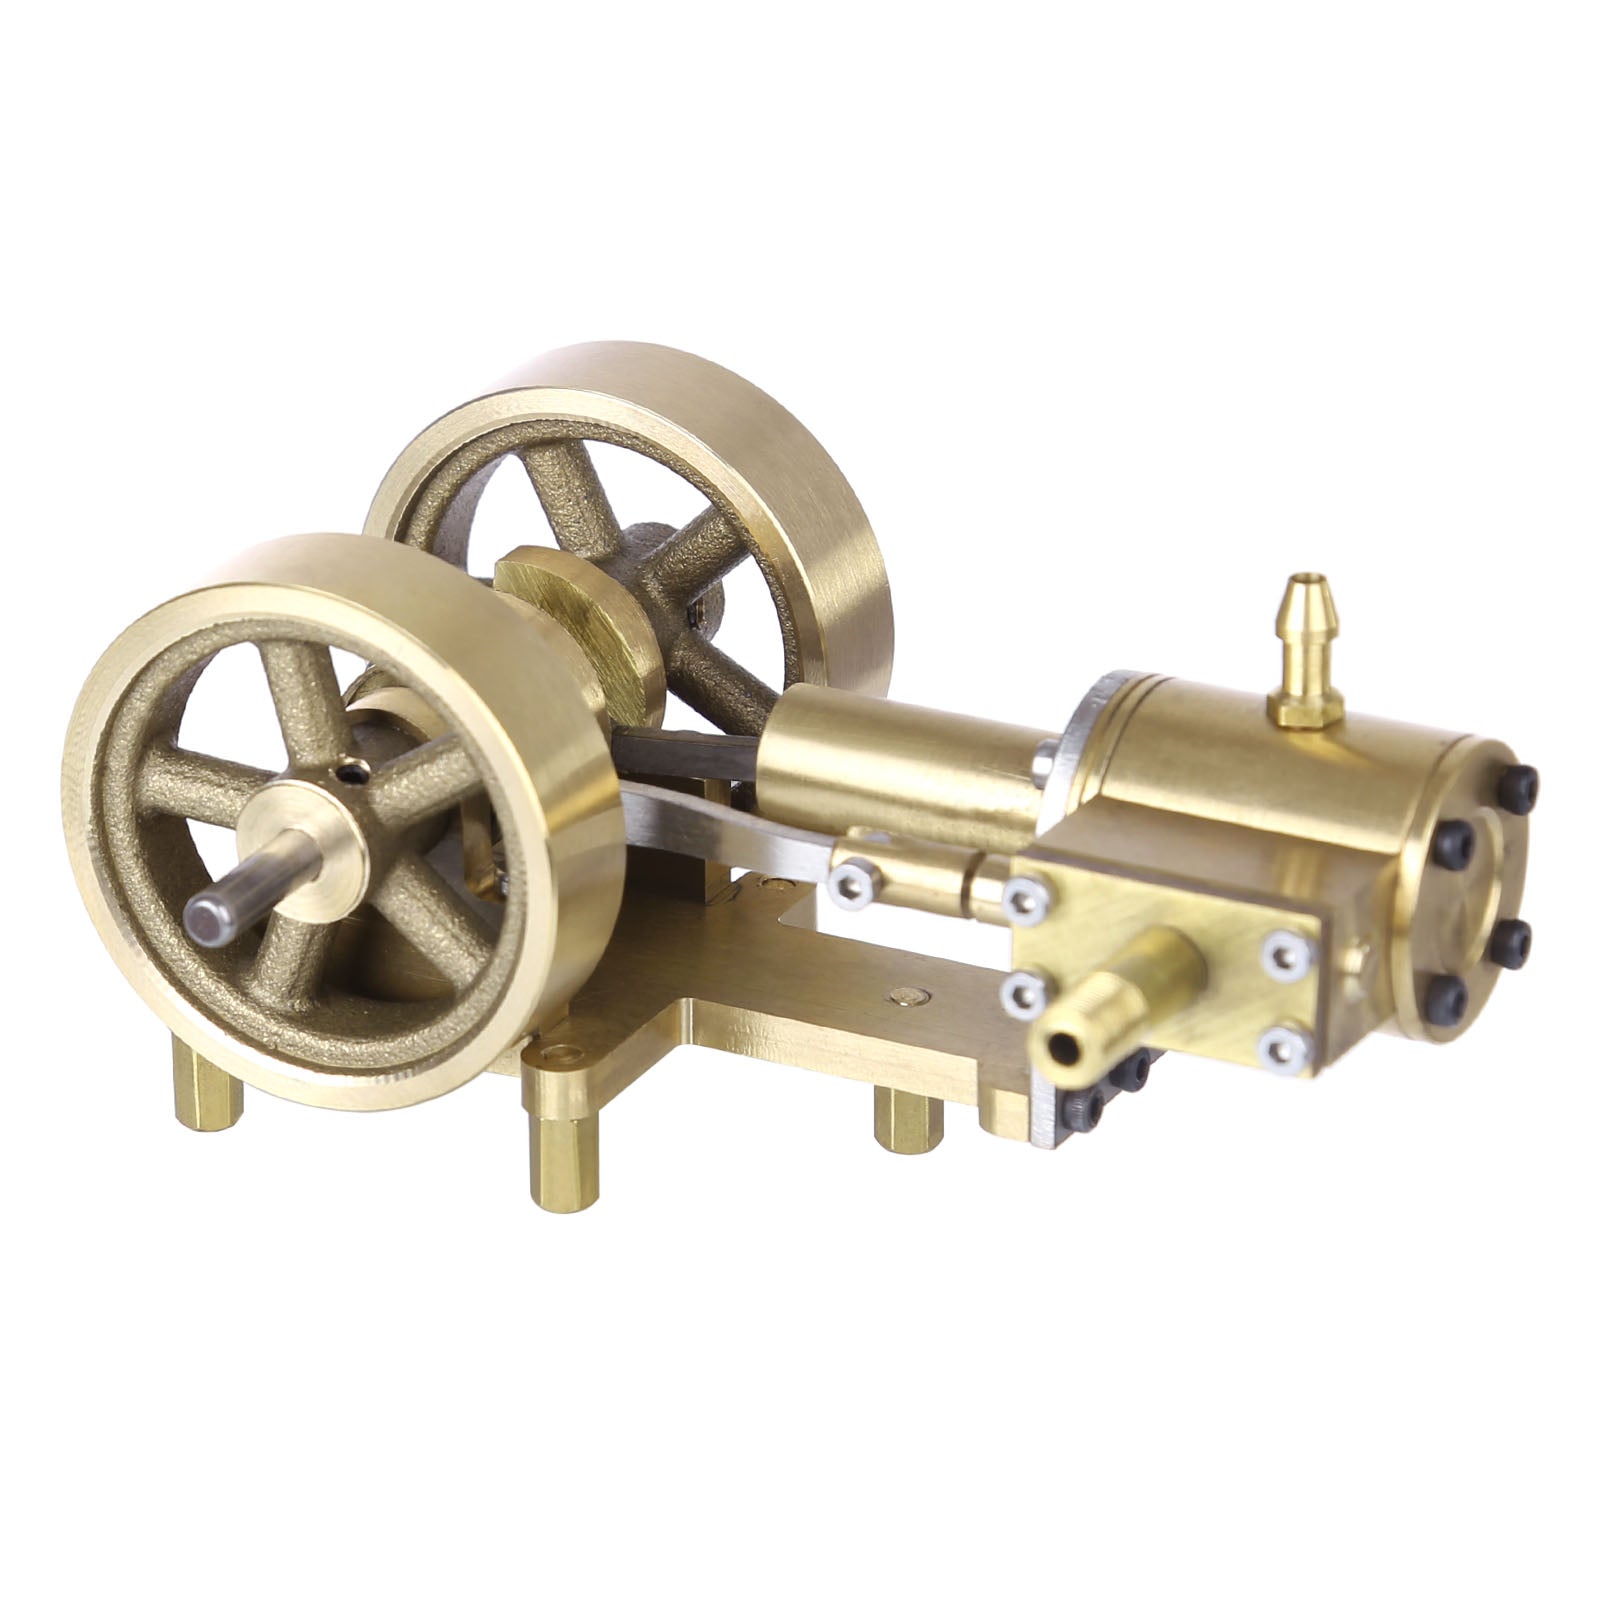 Tractor Head Shape Double Flywheel Steam Engine Model enginediyshop